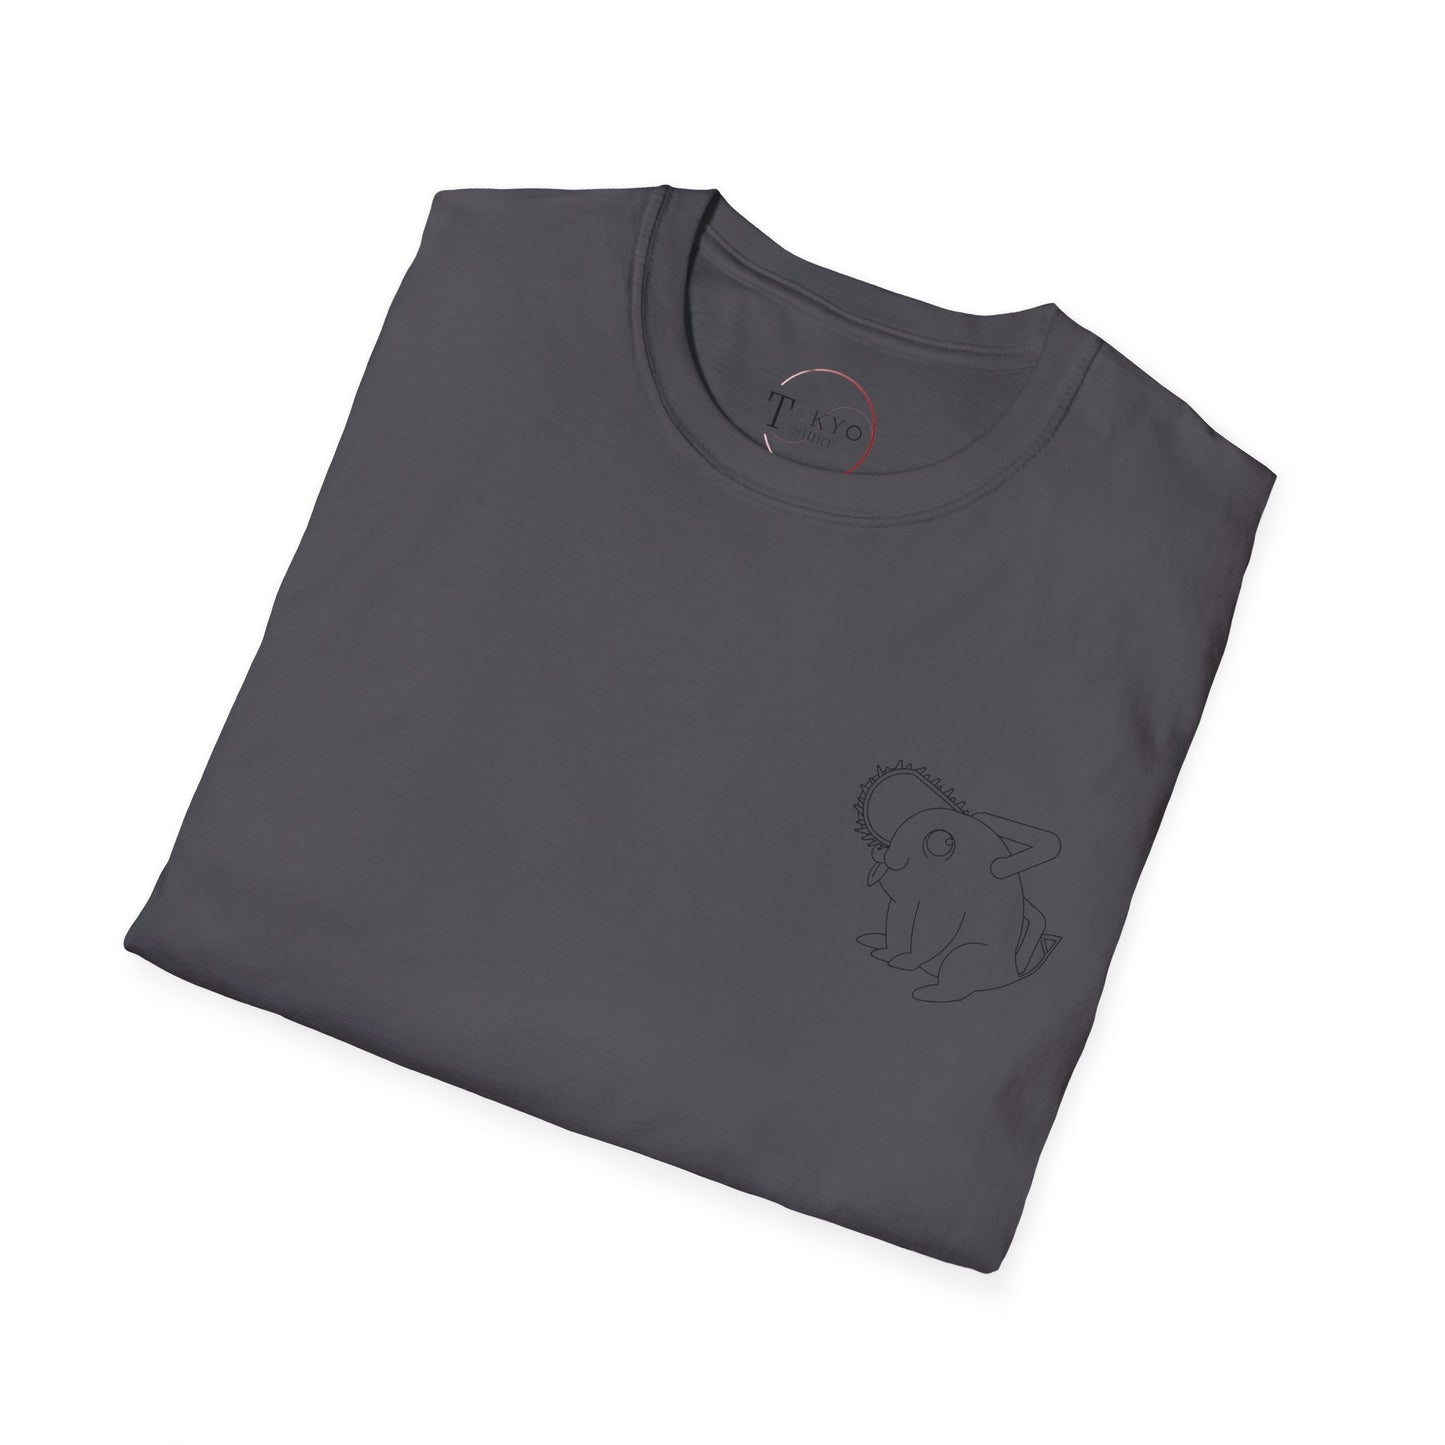 Pochita - Unisex Softstyle T-Shirt